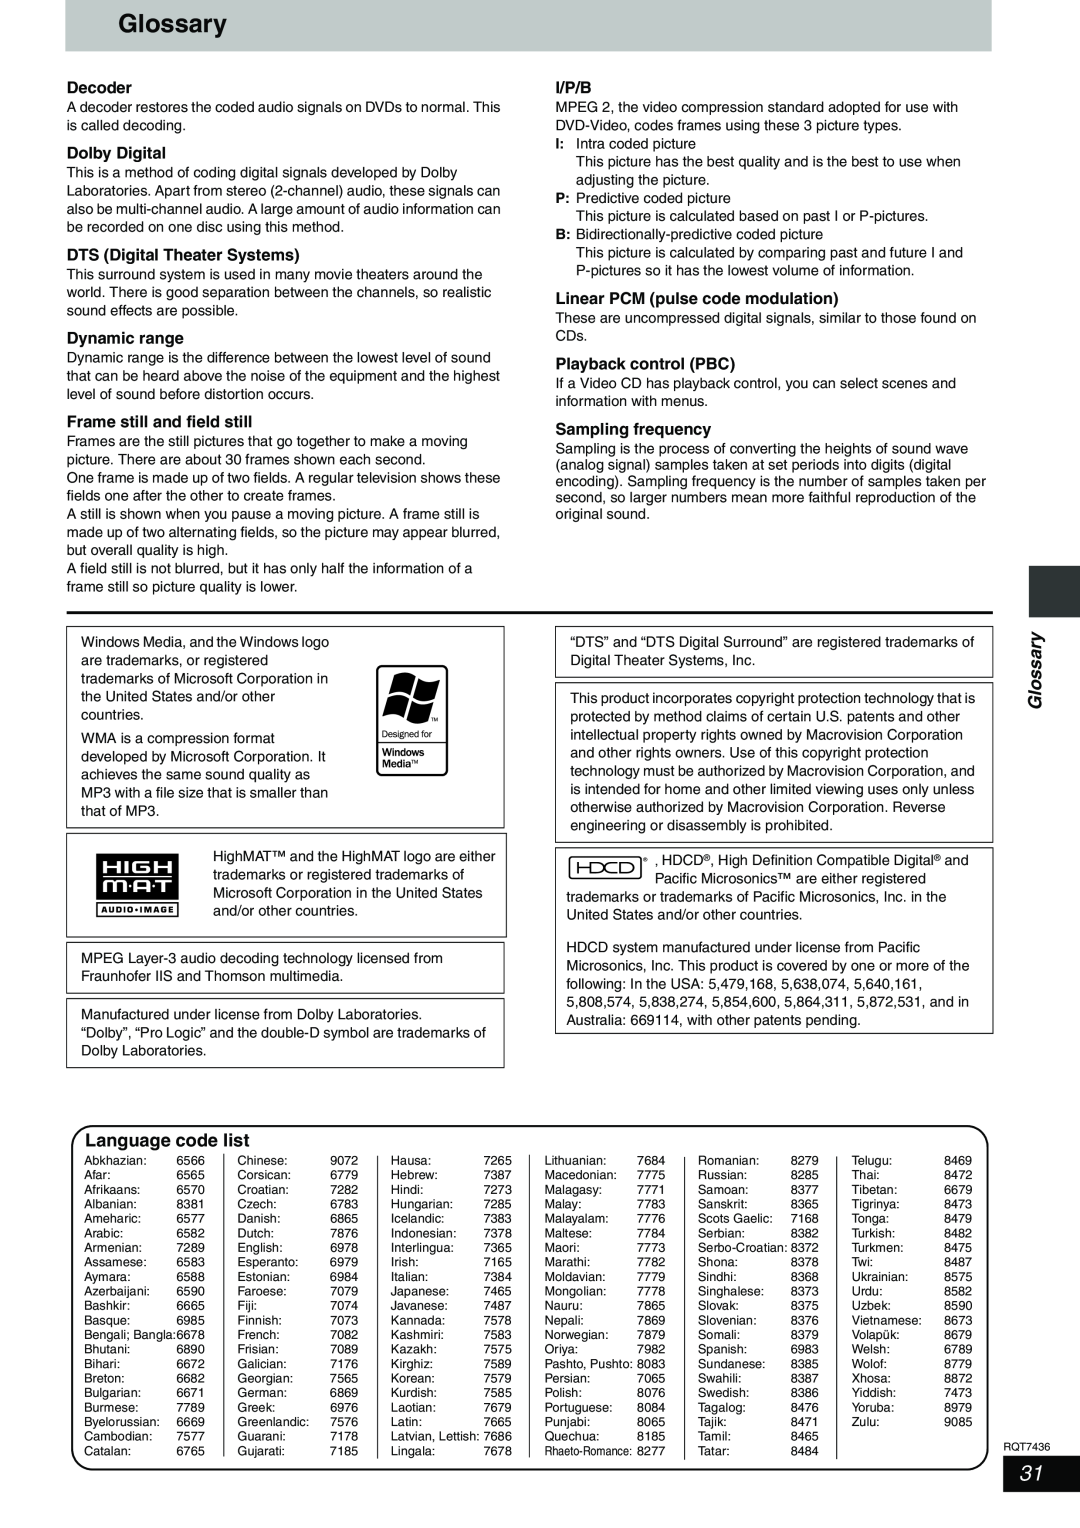 Panasonic SC-HT928 Glossary, Language code list, Decoder, Dolby Digital, DTS Digital Theater Systems, Dynamic range, I/P/B 